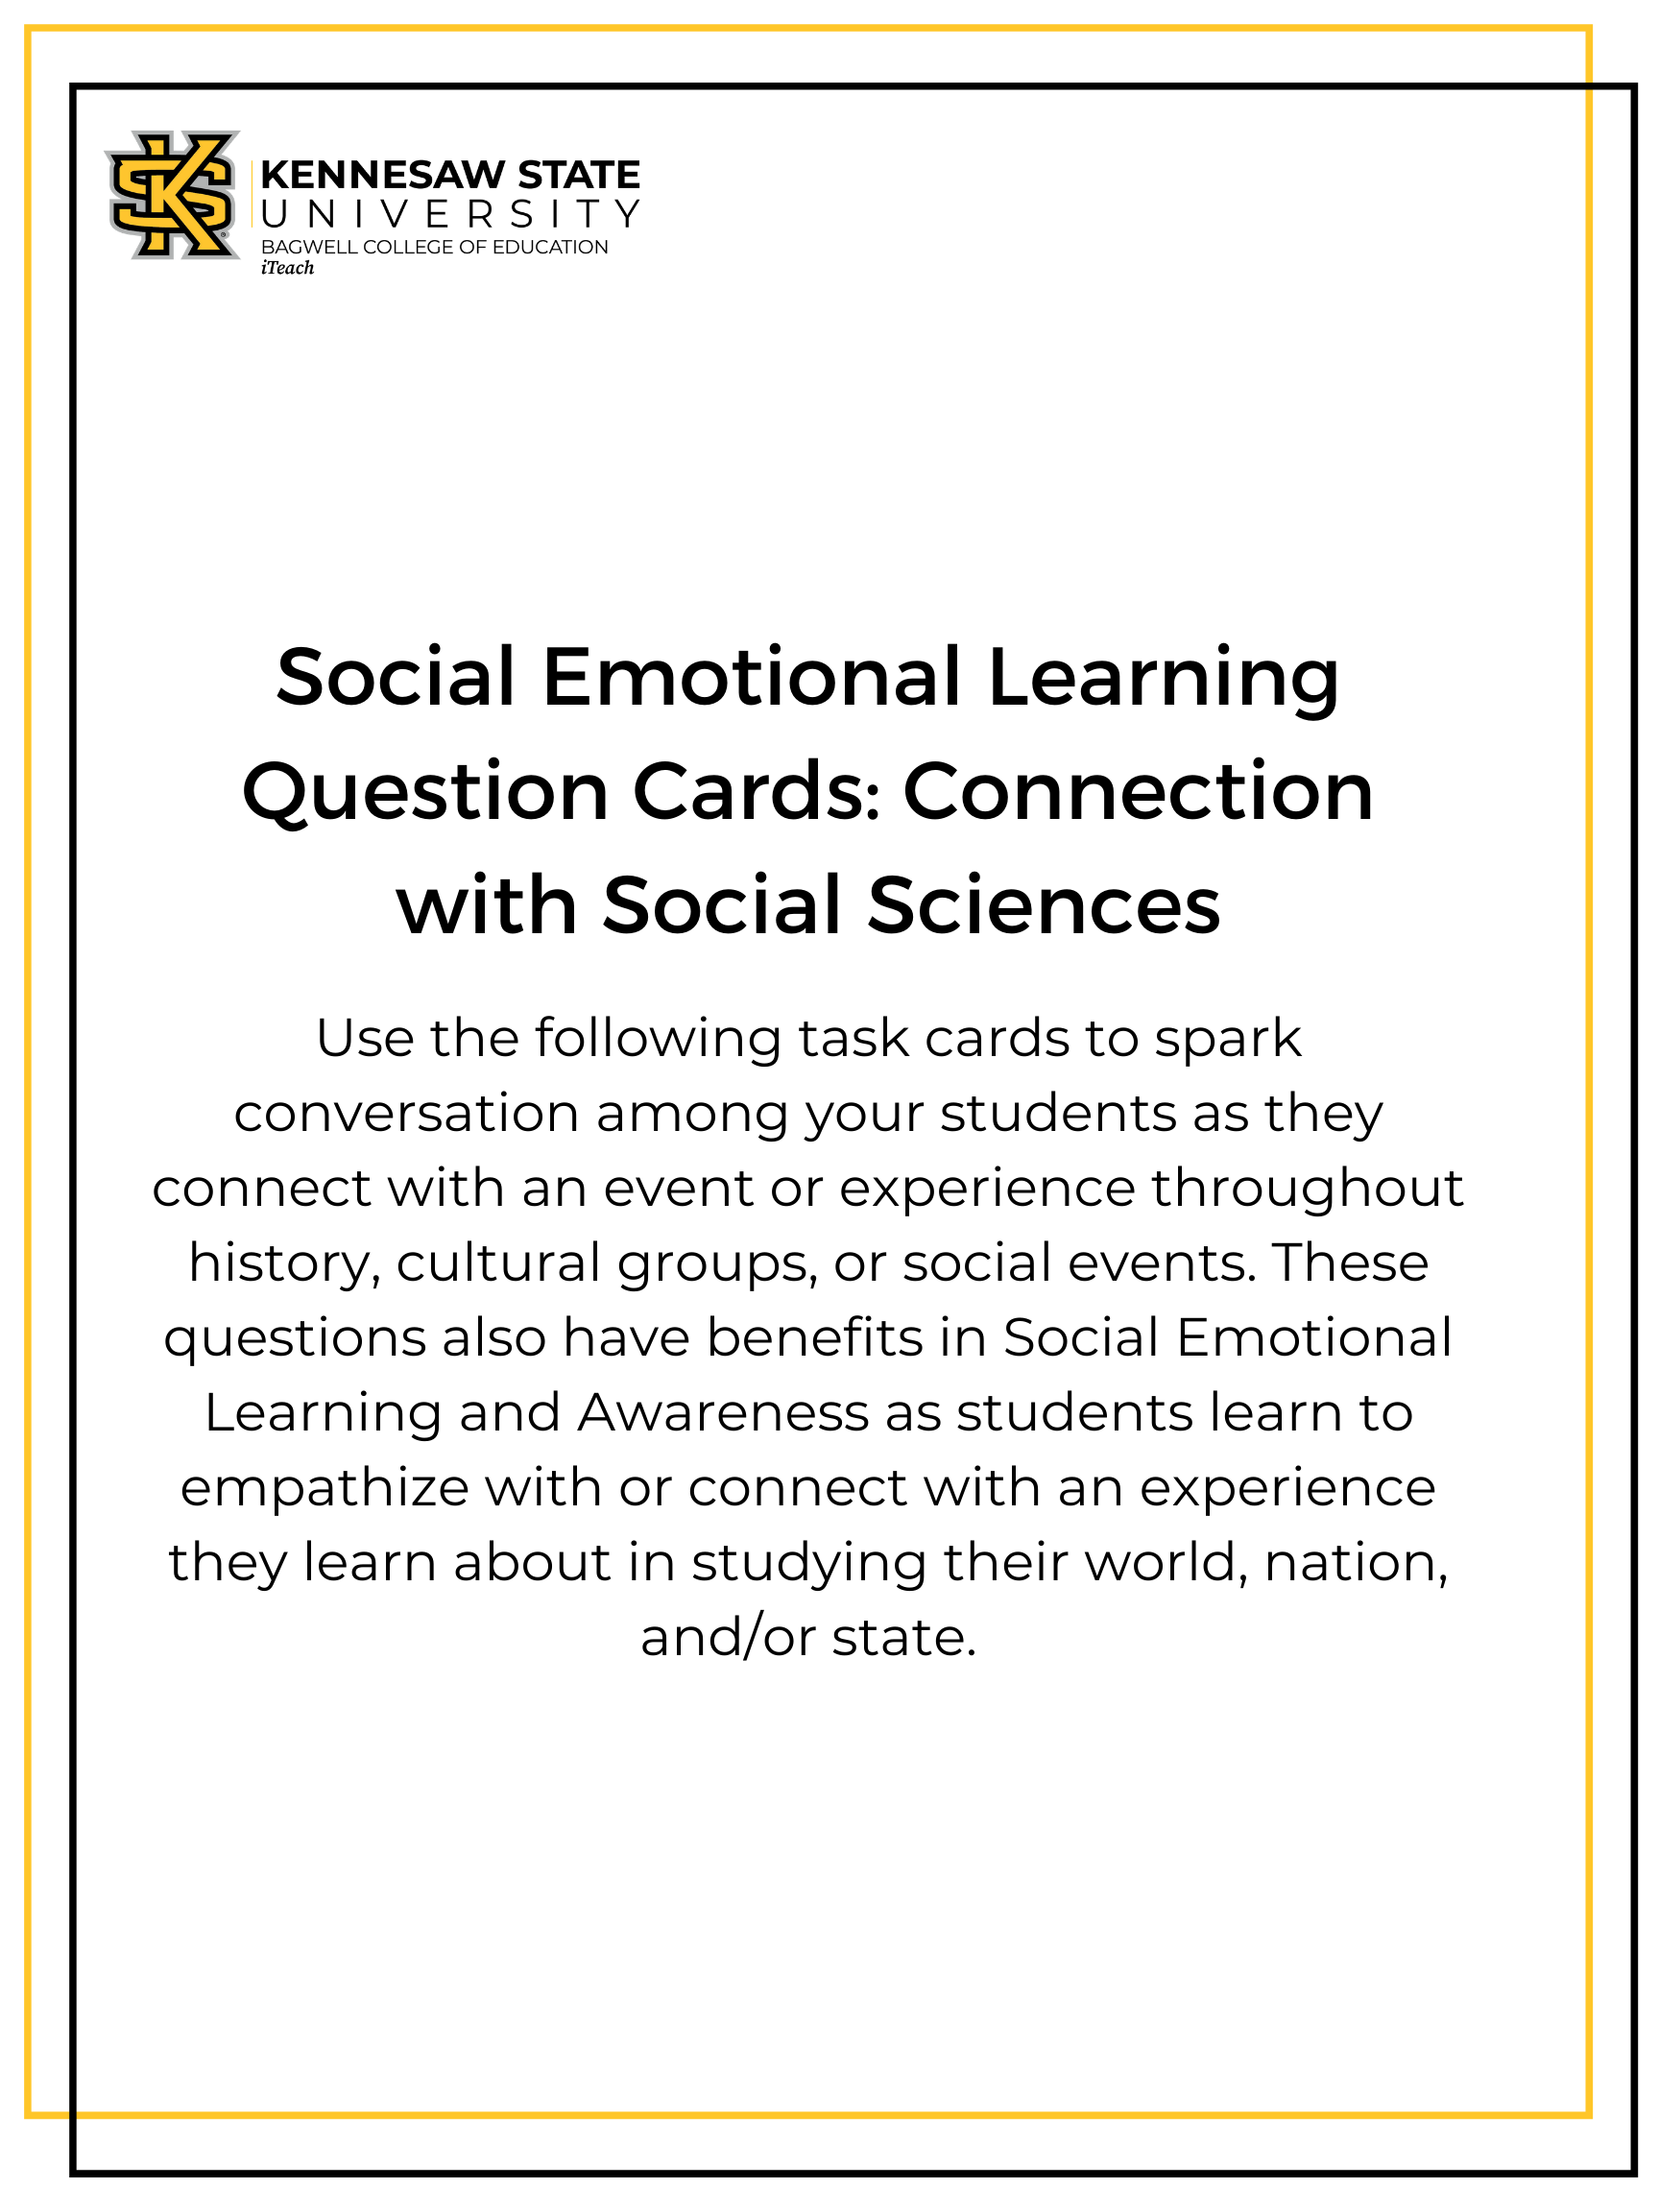 SEL Social Sciences Question Cards Header.png